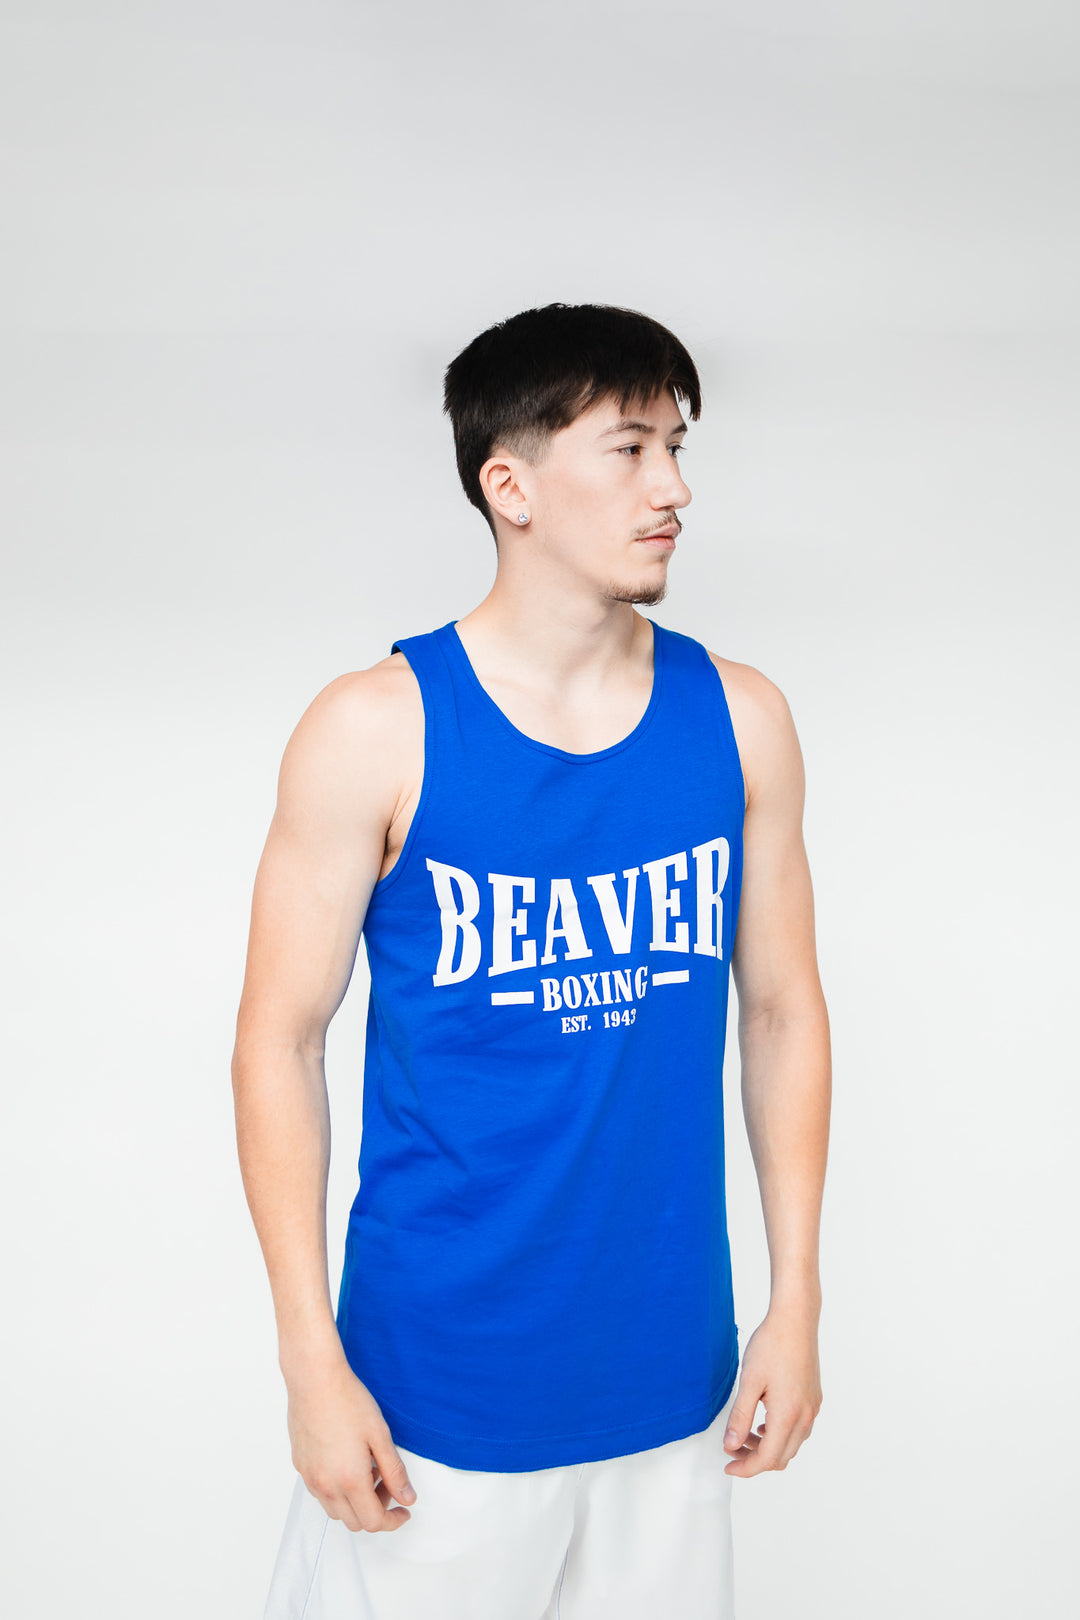 Beaver Boxing TANK TOP EST. 1943  - BLUE